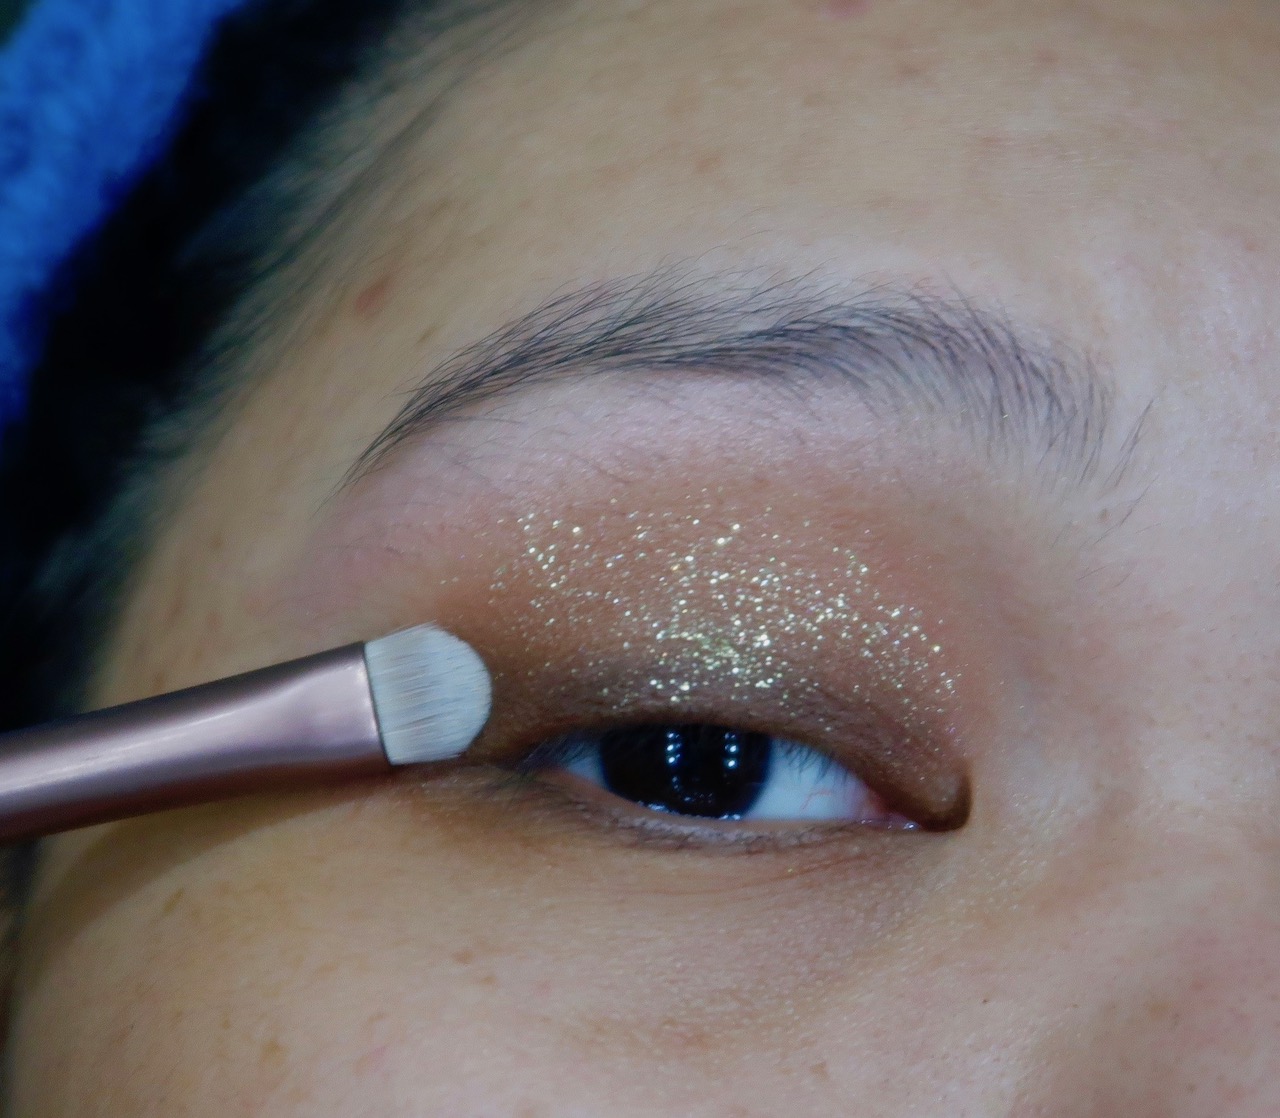 Black glitter smokey eyeshadow tutorial using our Ultra Glam eyeshadow, Glitter Eyeshadow Tutorial